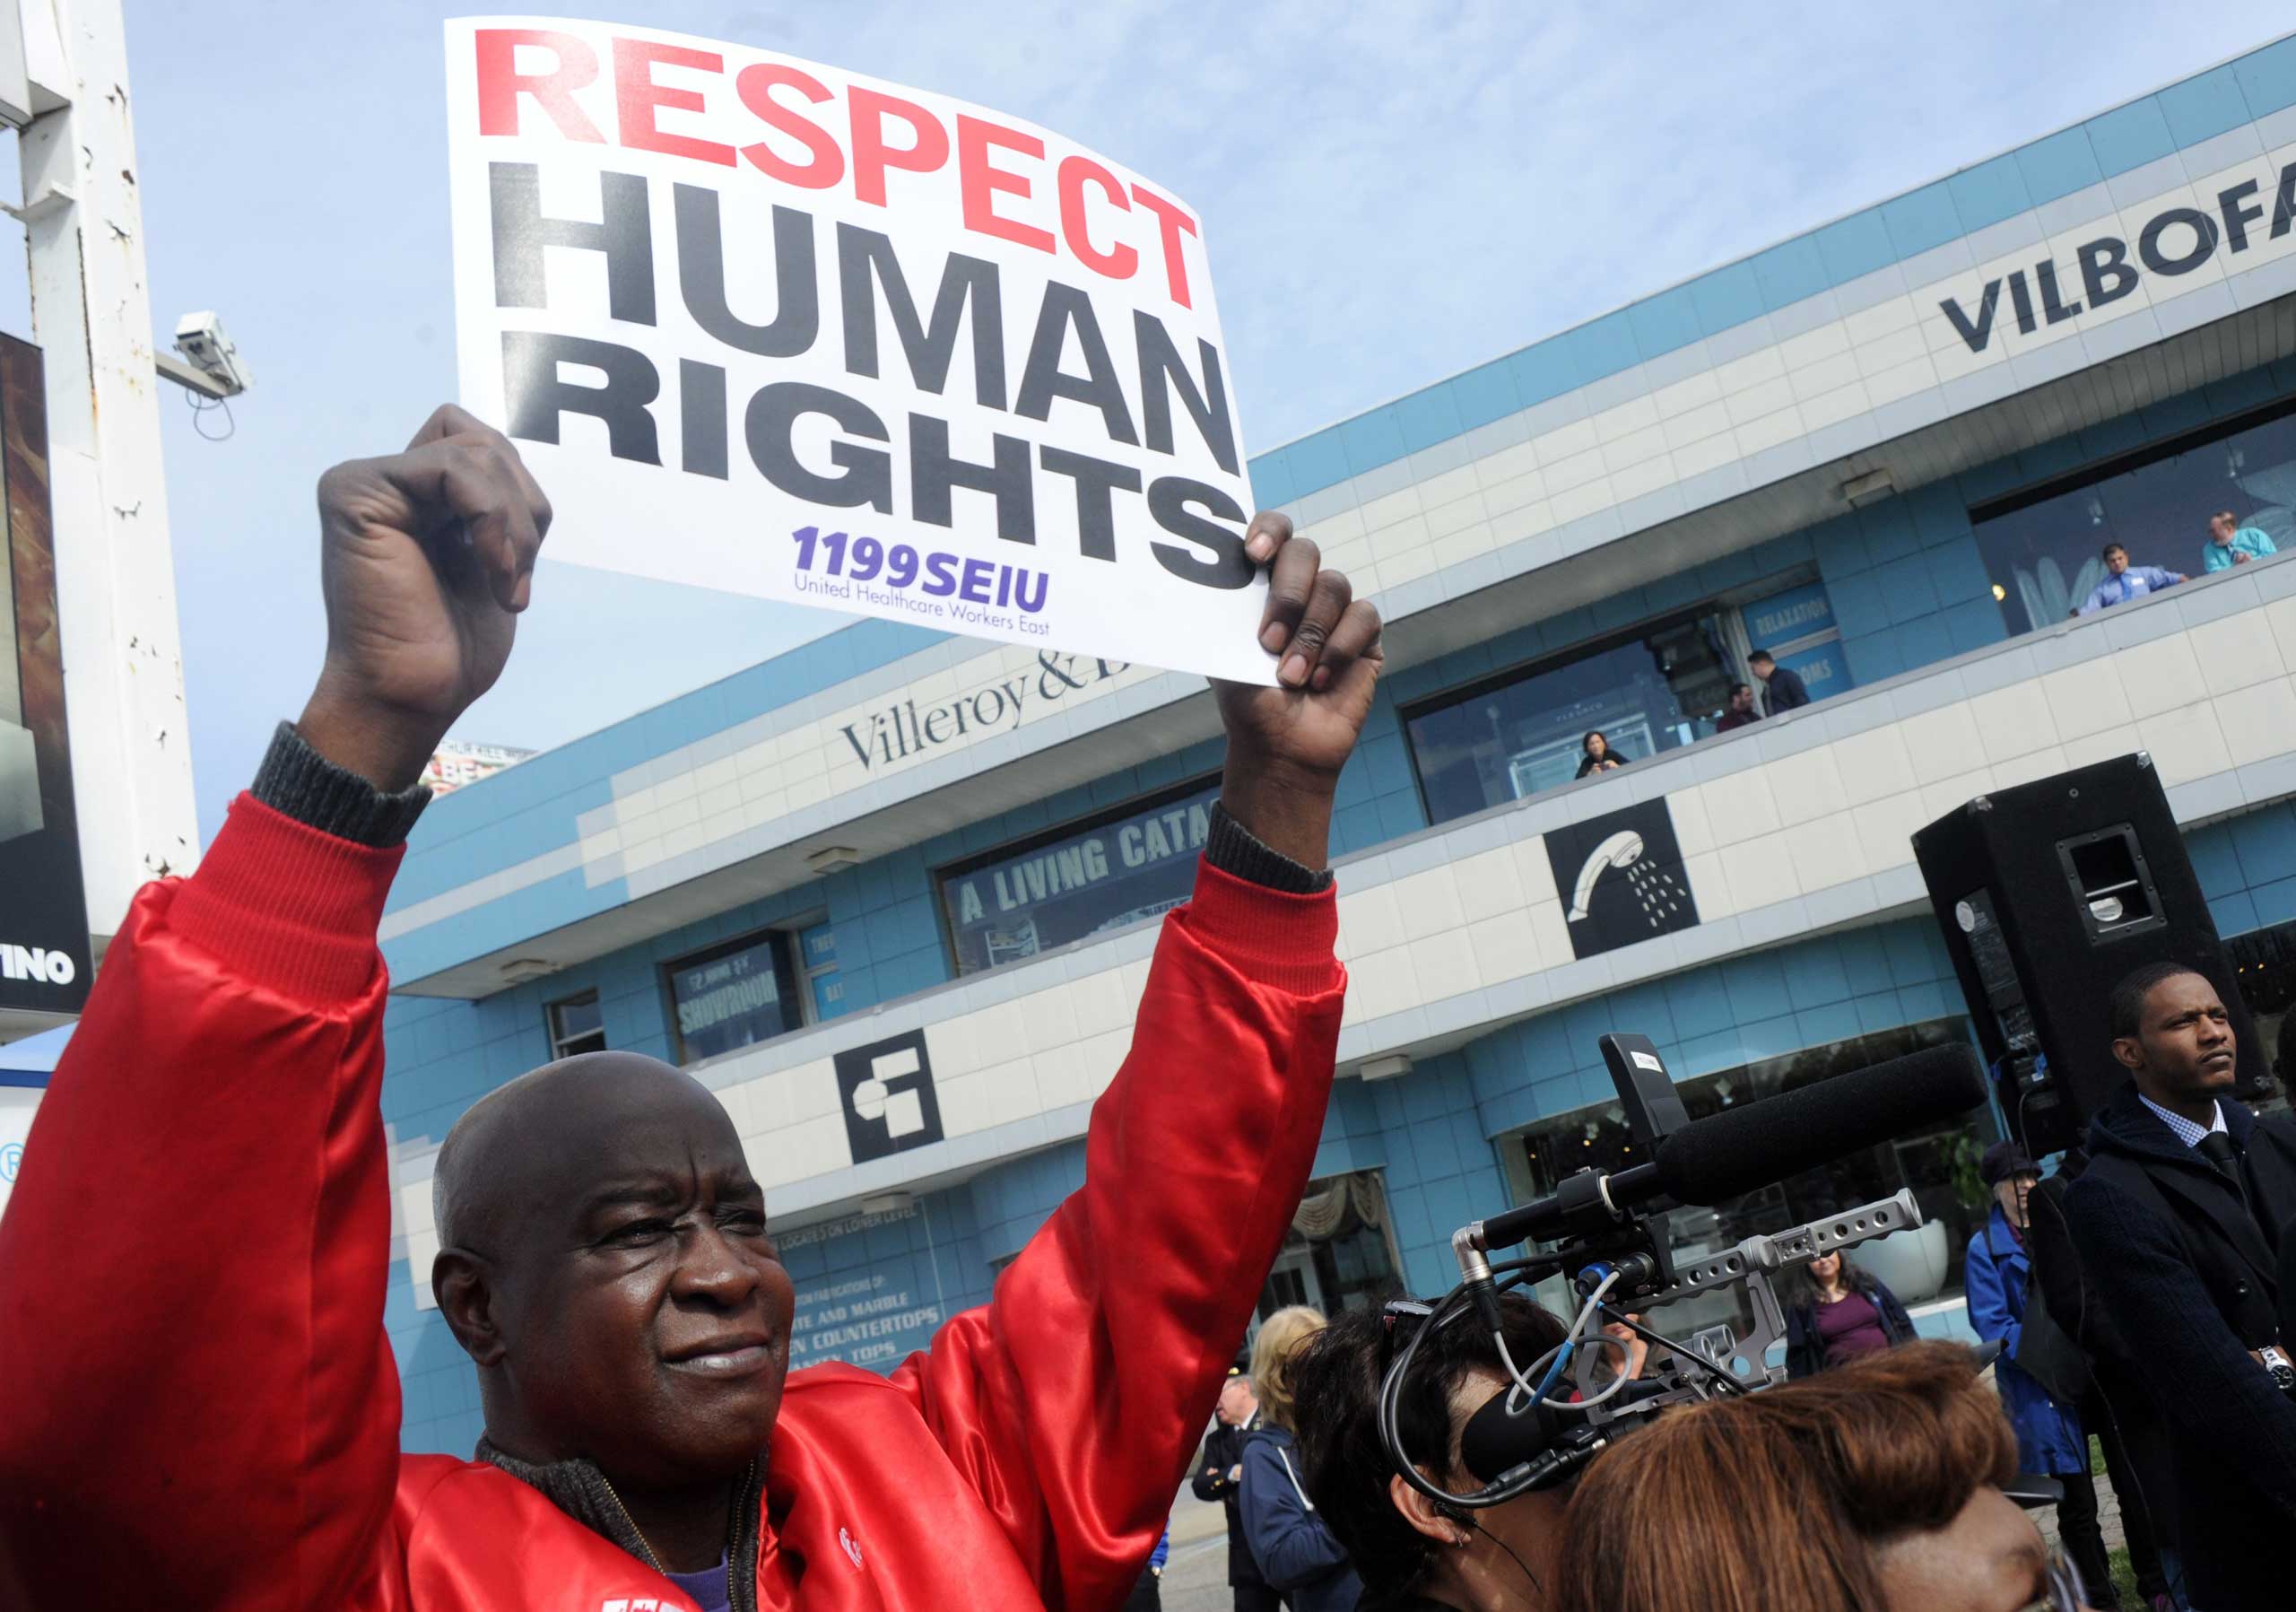 March2Justice demonstration calling for criminal justice reform, Staten Island, New York, April 13, 2015. (MediaPunch/REX Shutterstock)